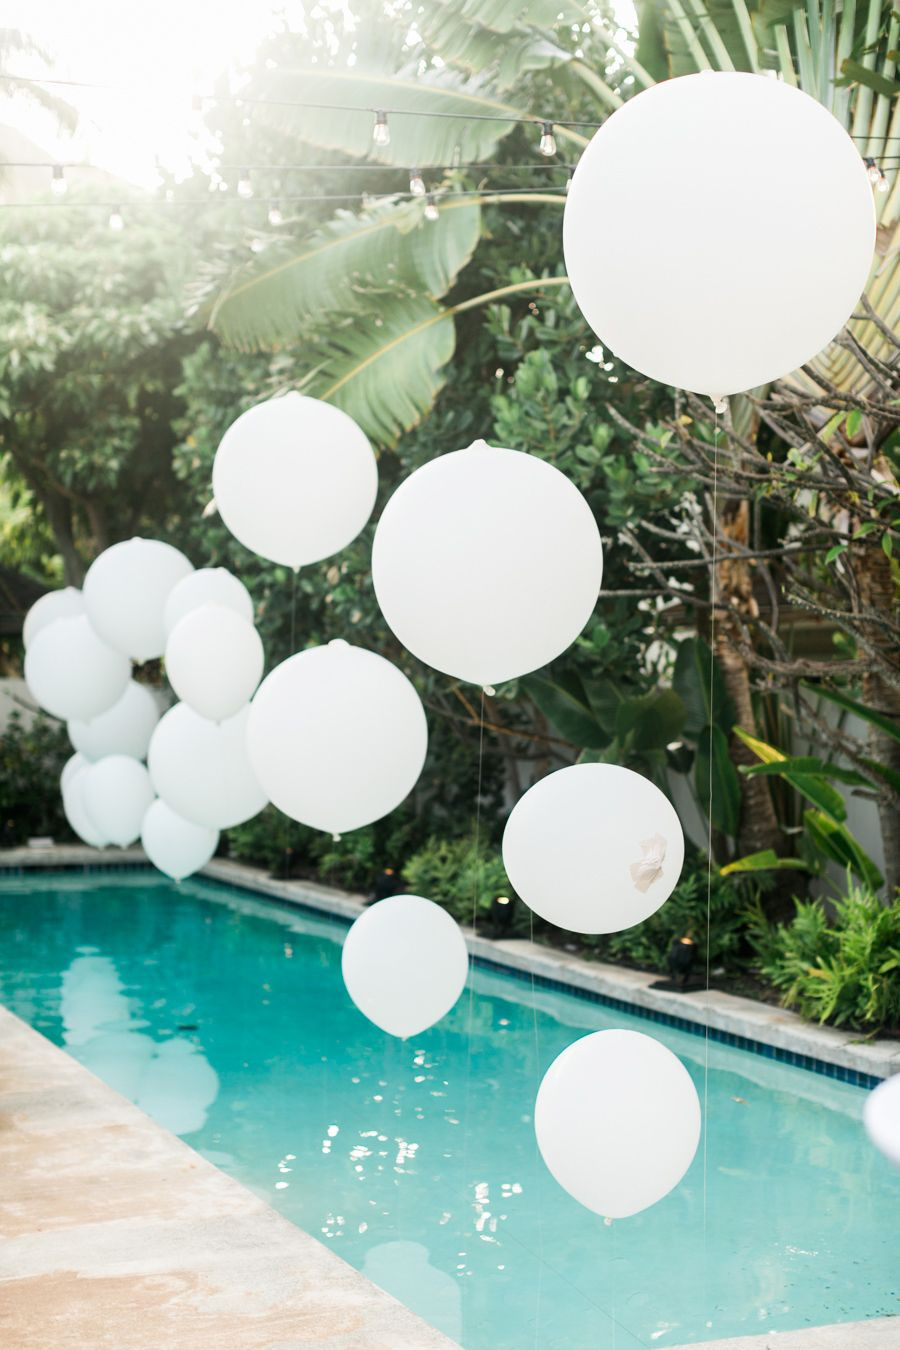 All White Pool Party Ideas
 Summer celebration Image via Rebecca Arthurs